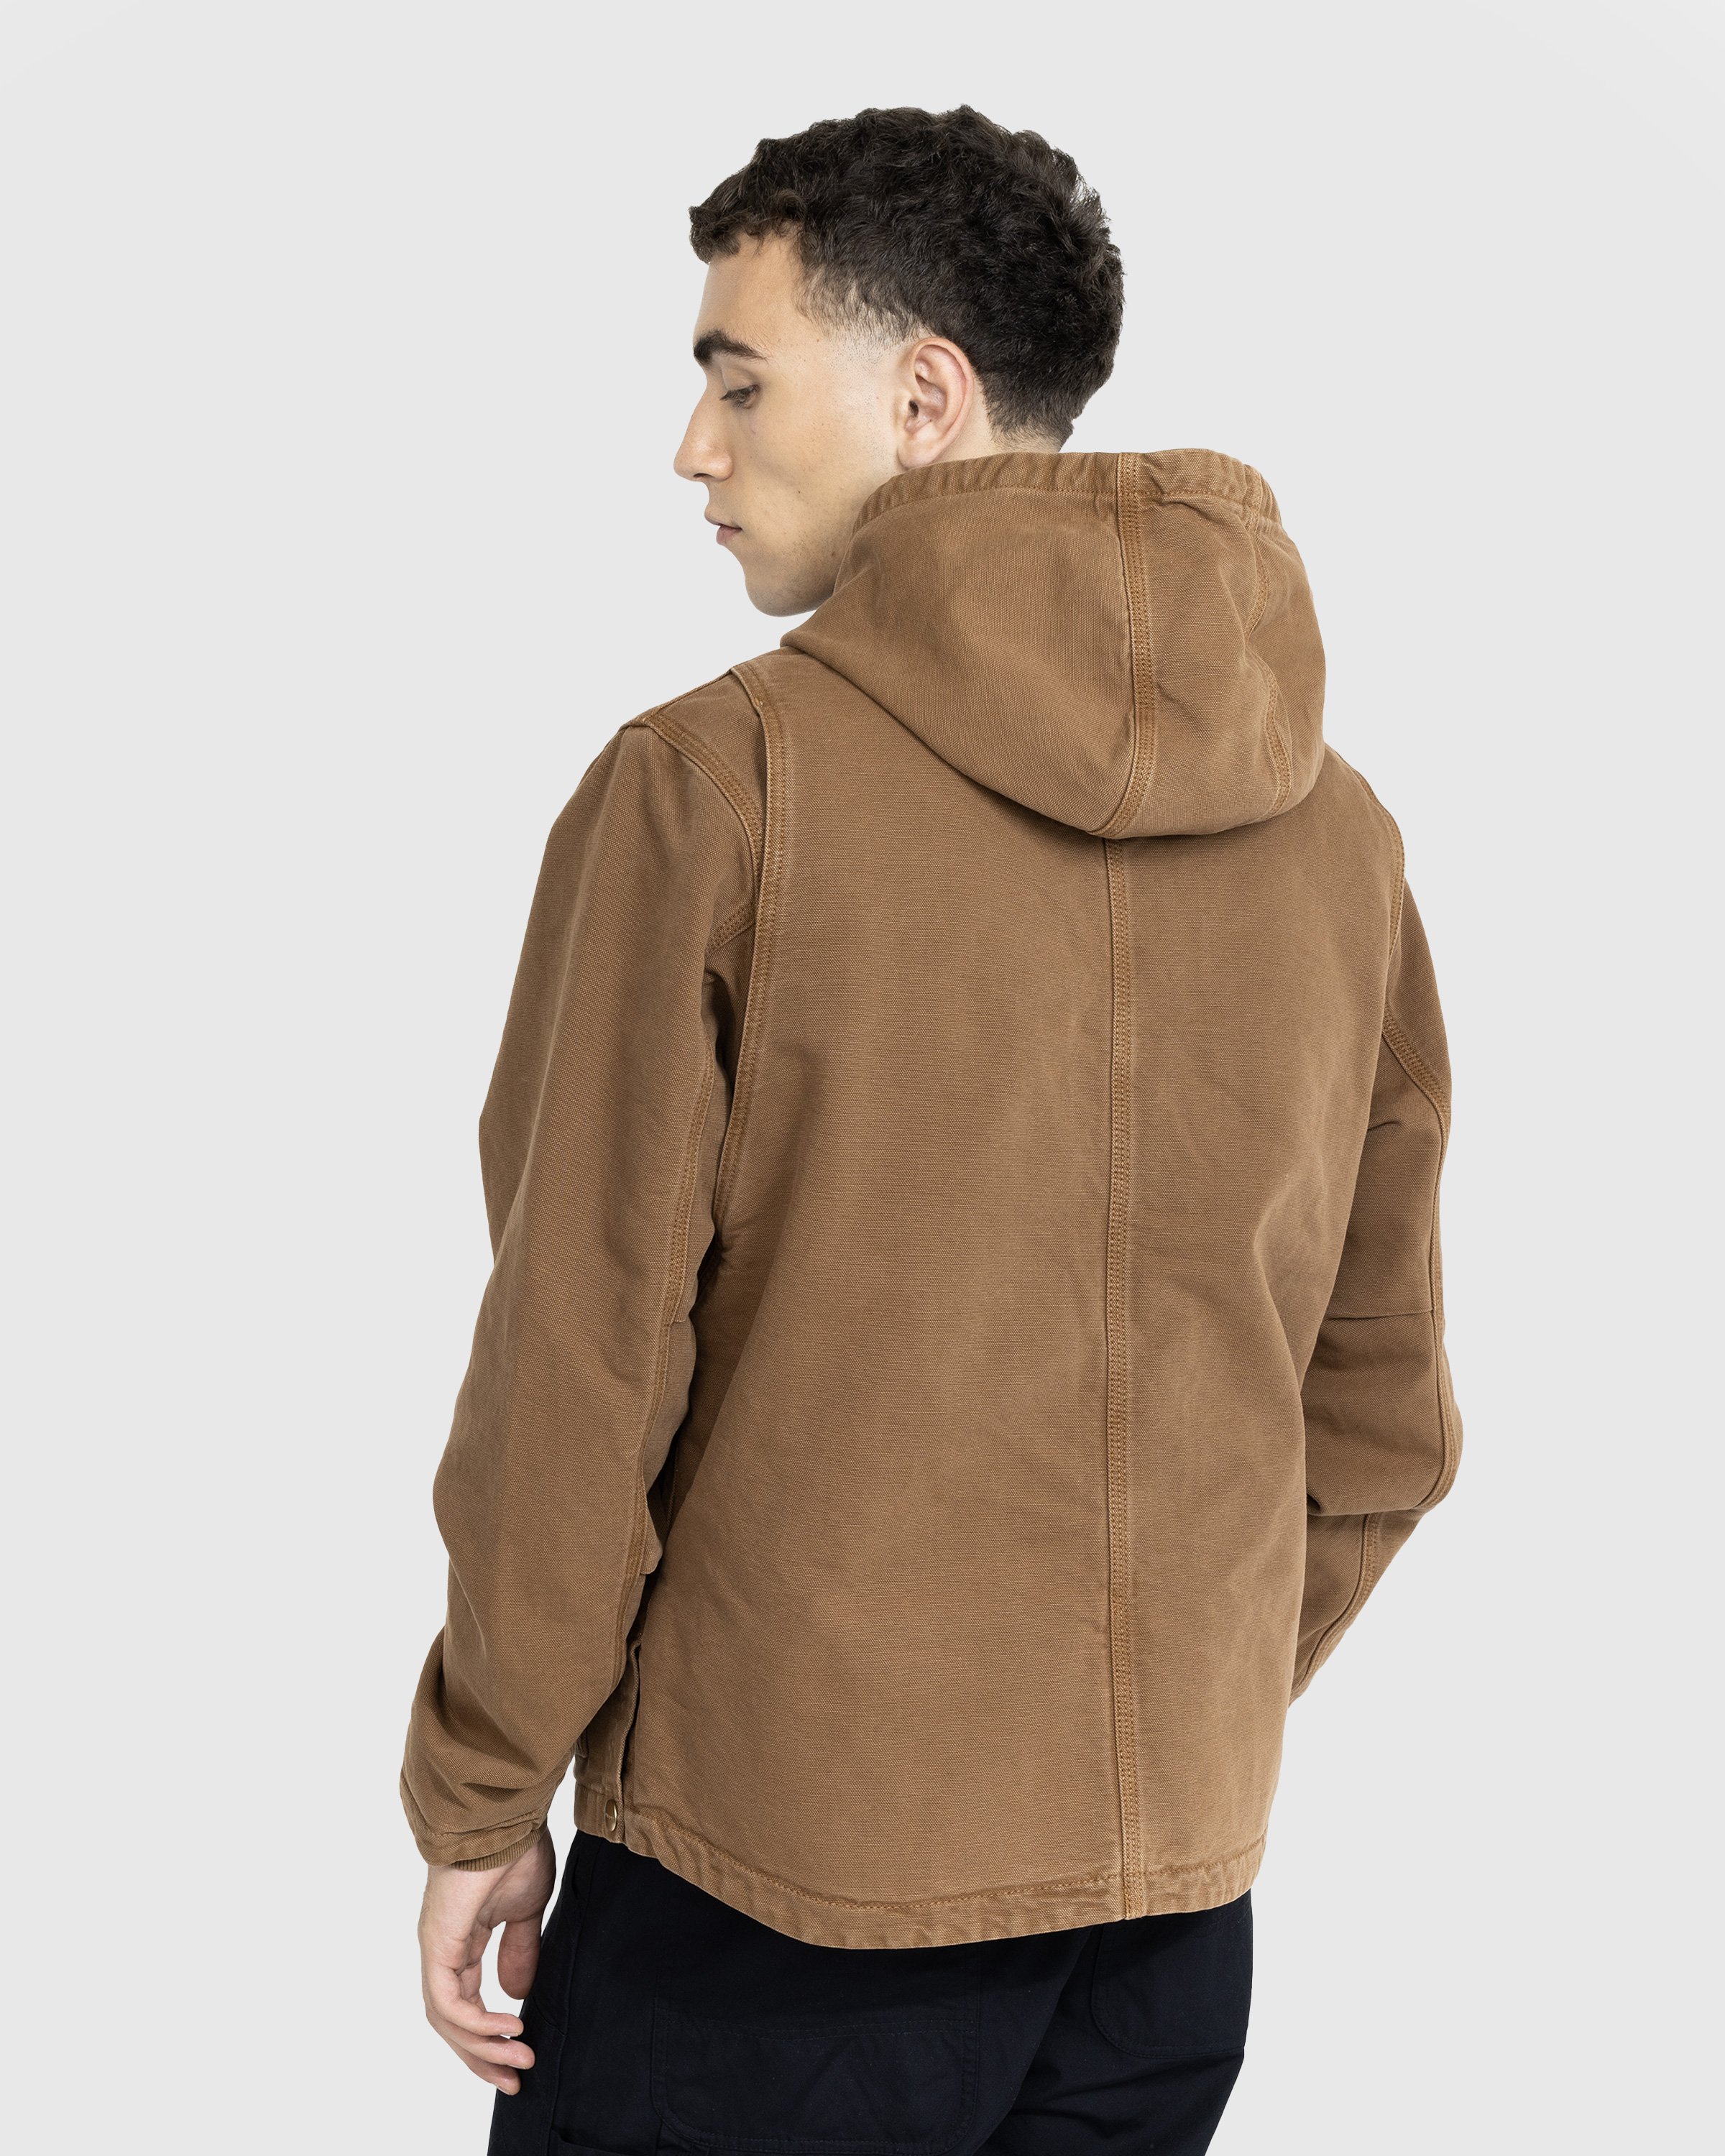 Carhartt WIP - Arling Jacket Faded Tamarind - Clothing - Brown - Image 3